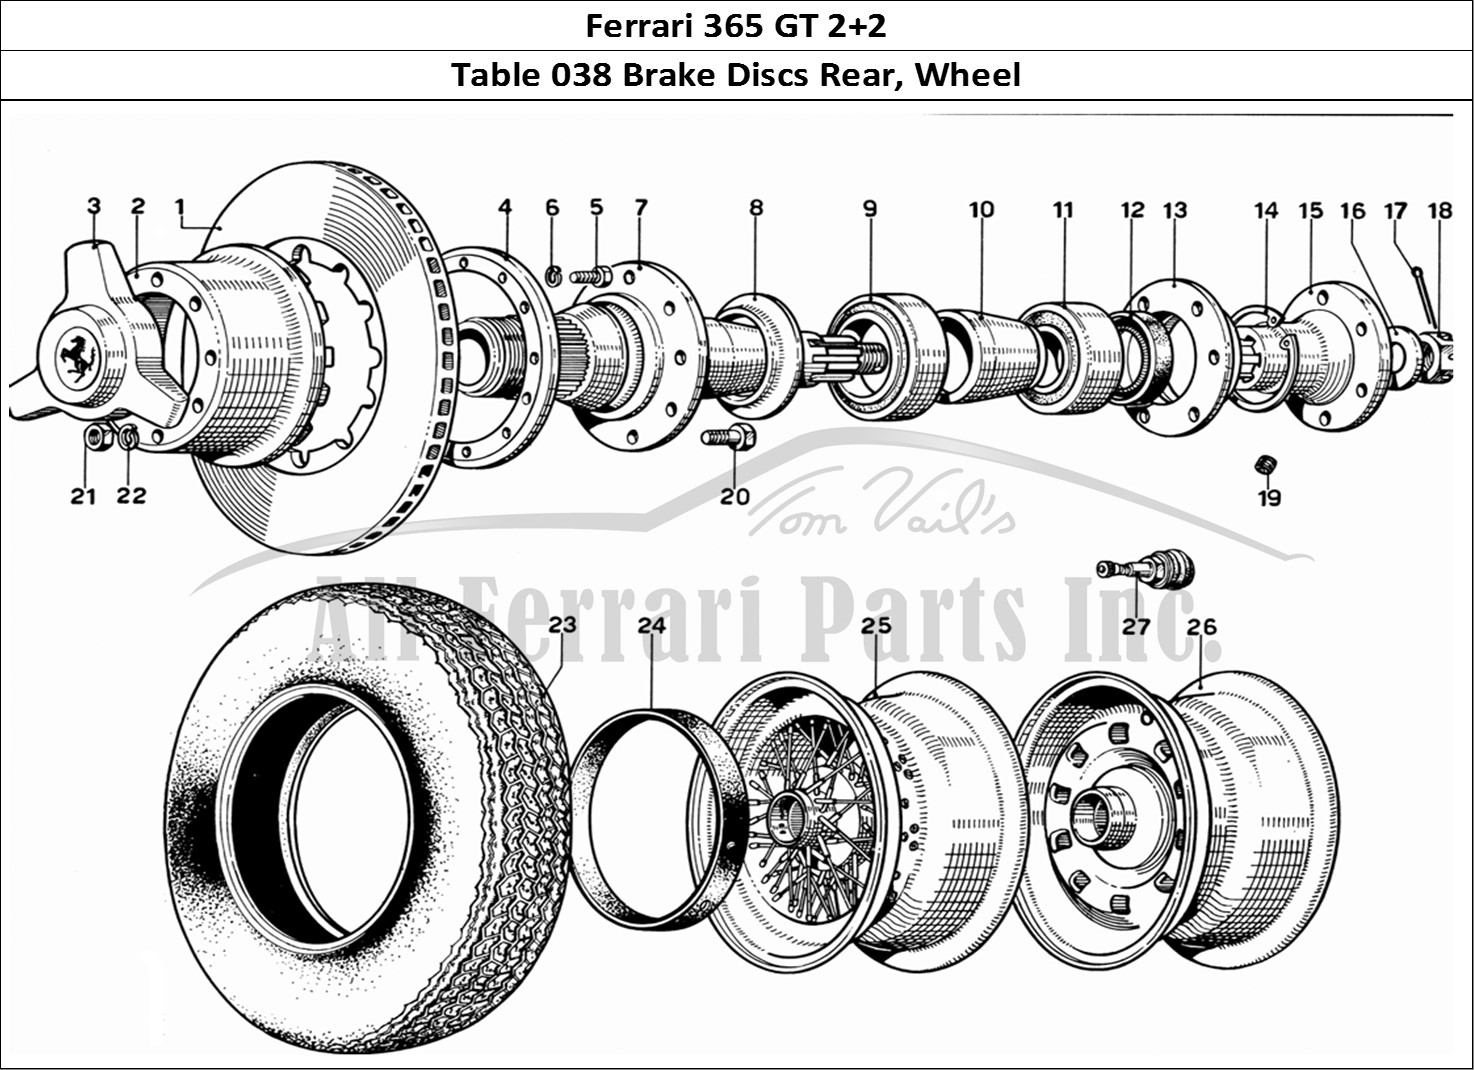 Ferrari Parts Ferrari 365 GT 2+2 (Mechanical) Page 038 Rear Brake Disc and Wheel